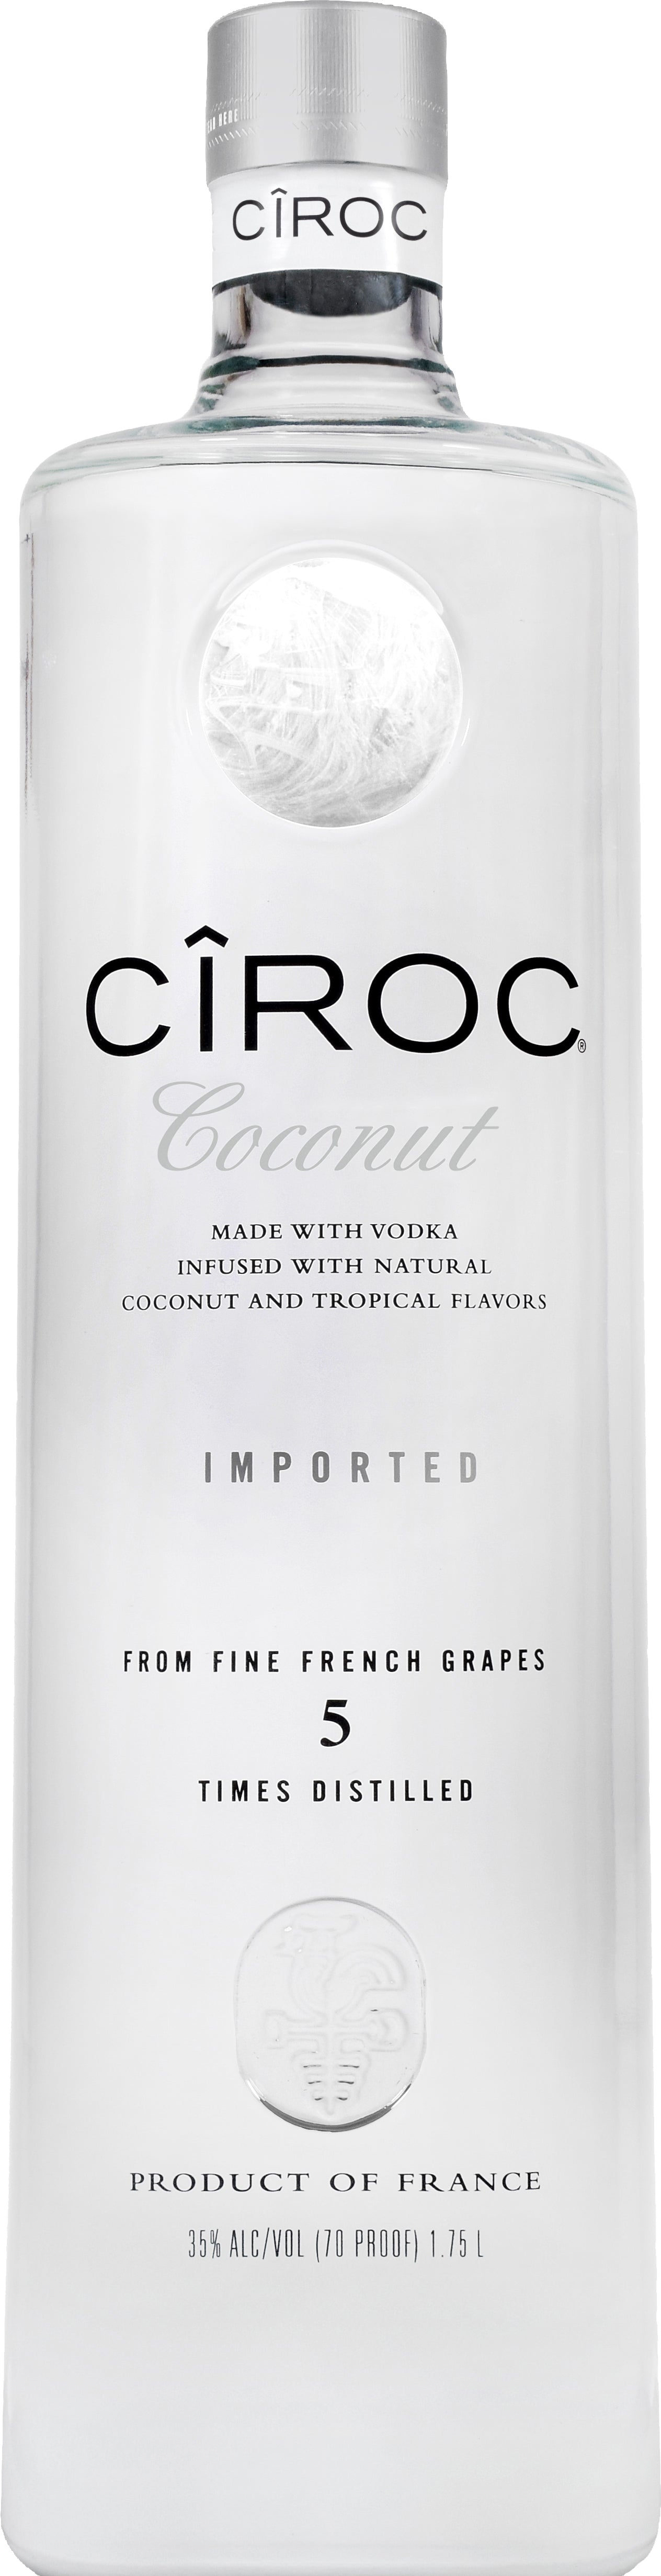 Ciroc Coconut Vodka 1.75L - Luekens Wine & Spirits